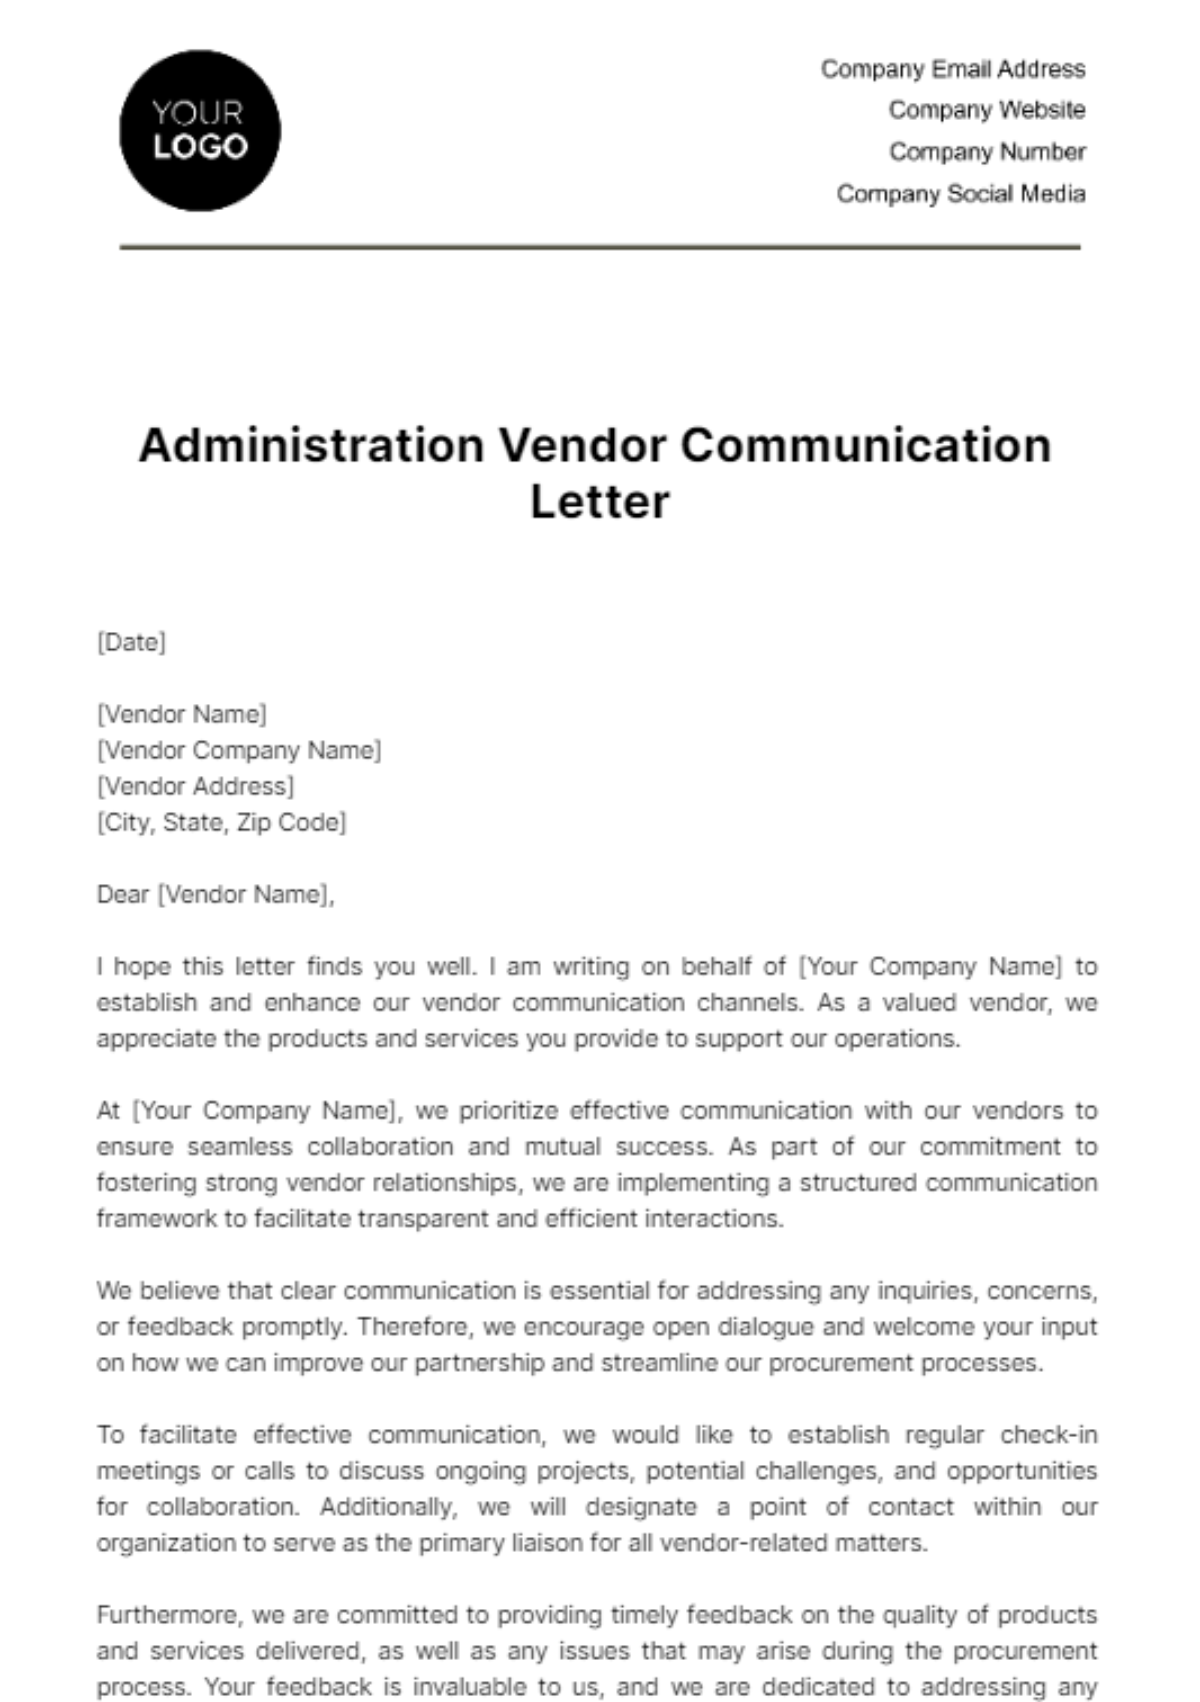 Free Administration Vendor Communication Letter Template